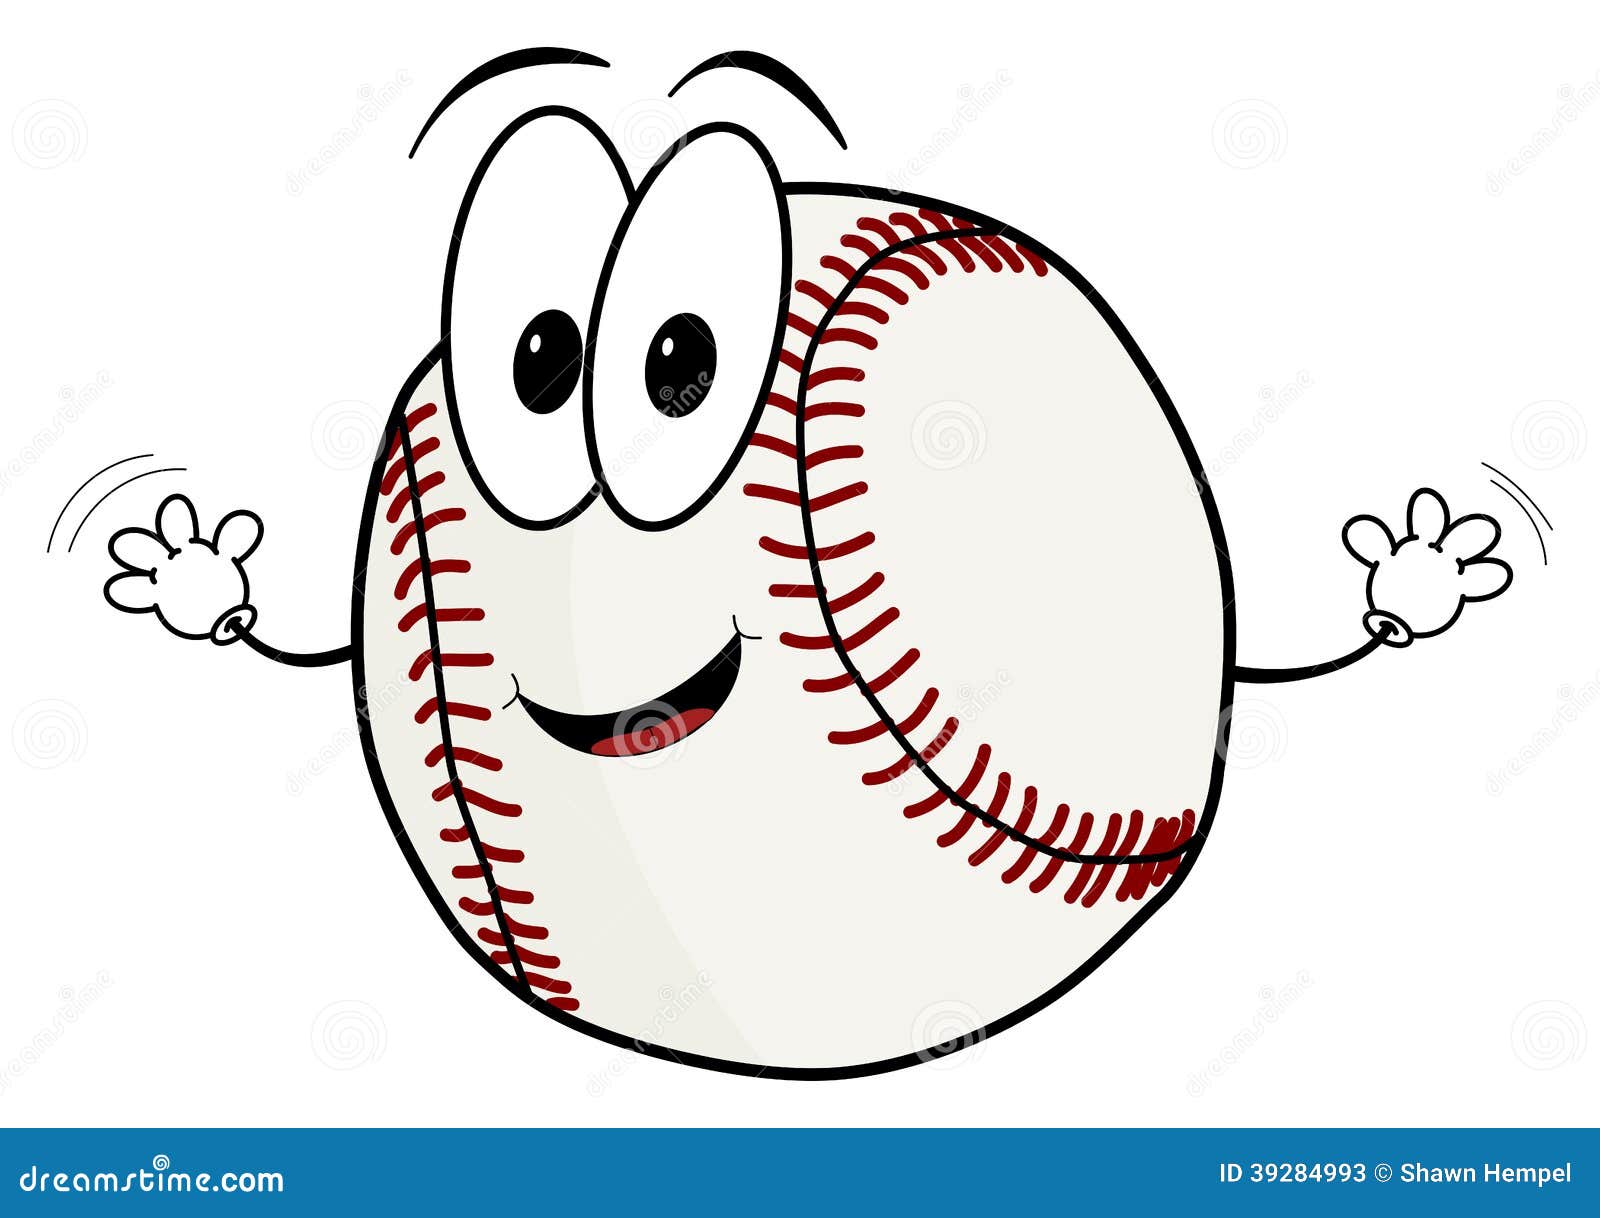 free animated baseball clipart - photo #8